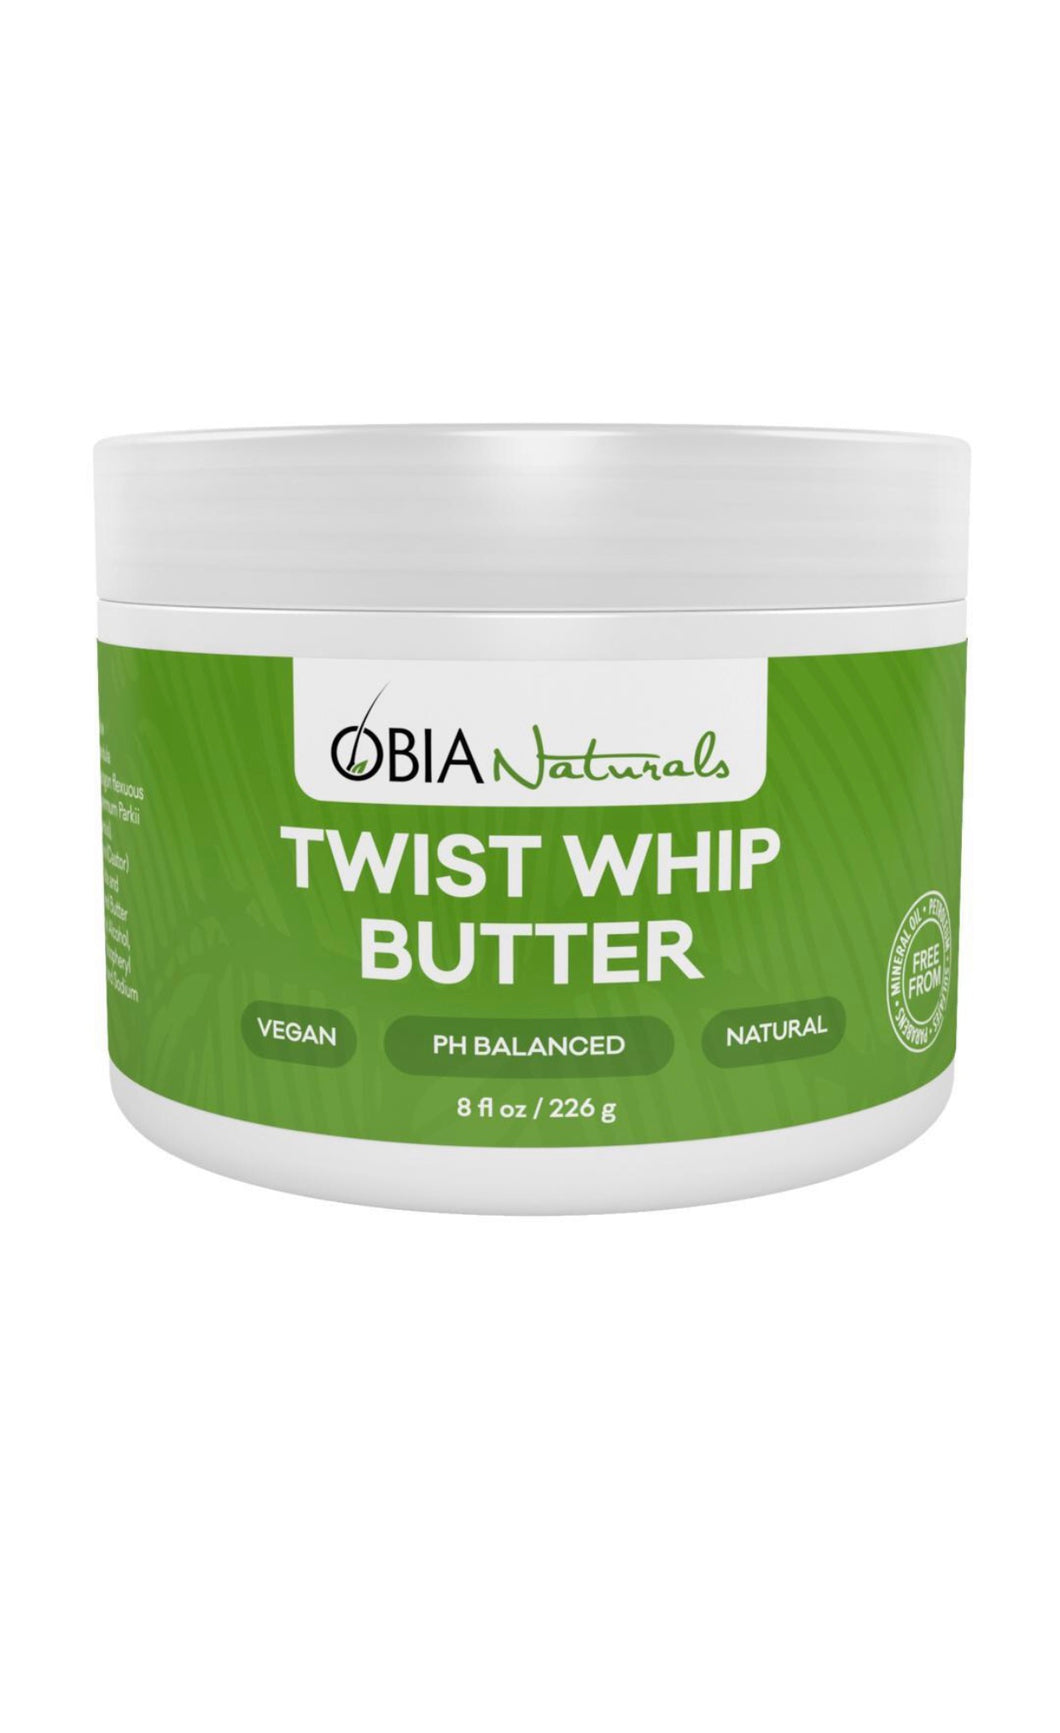 OBIA Naturals Twist Whip Butter 12 oz